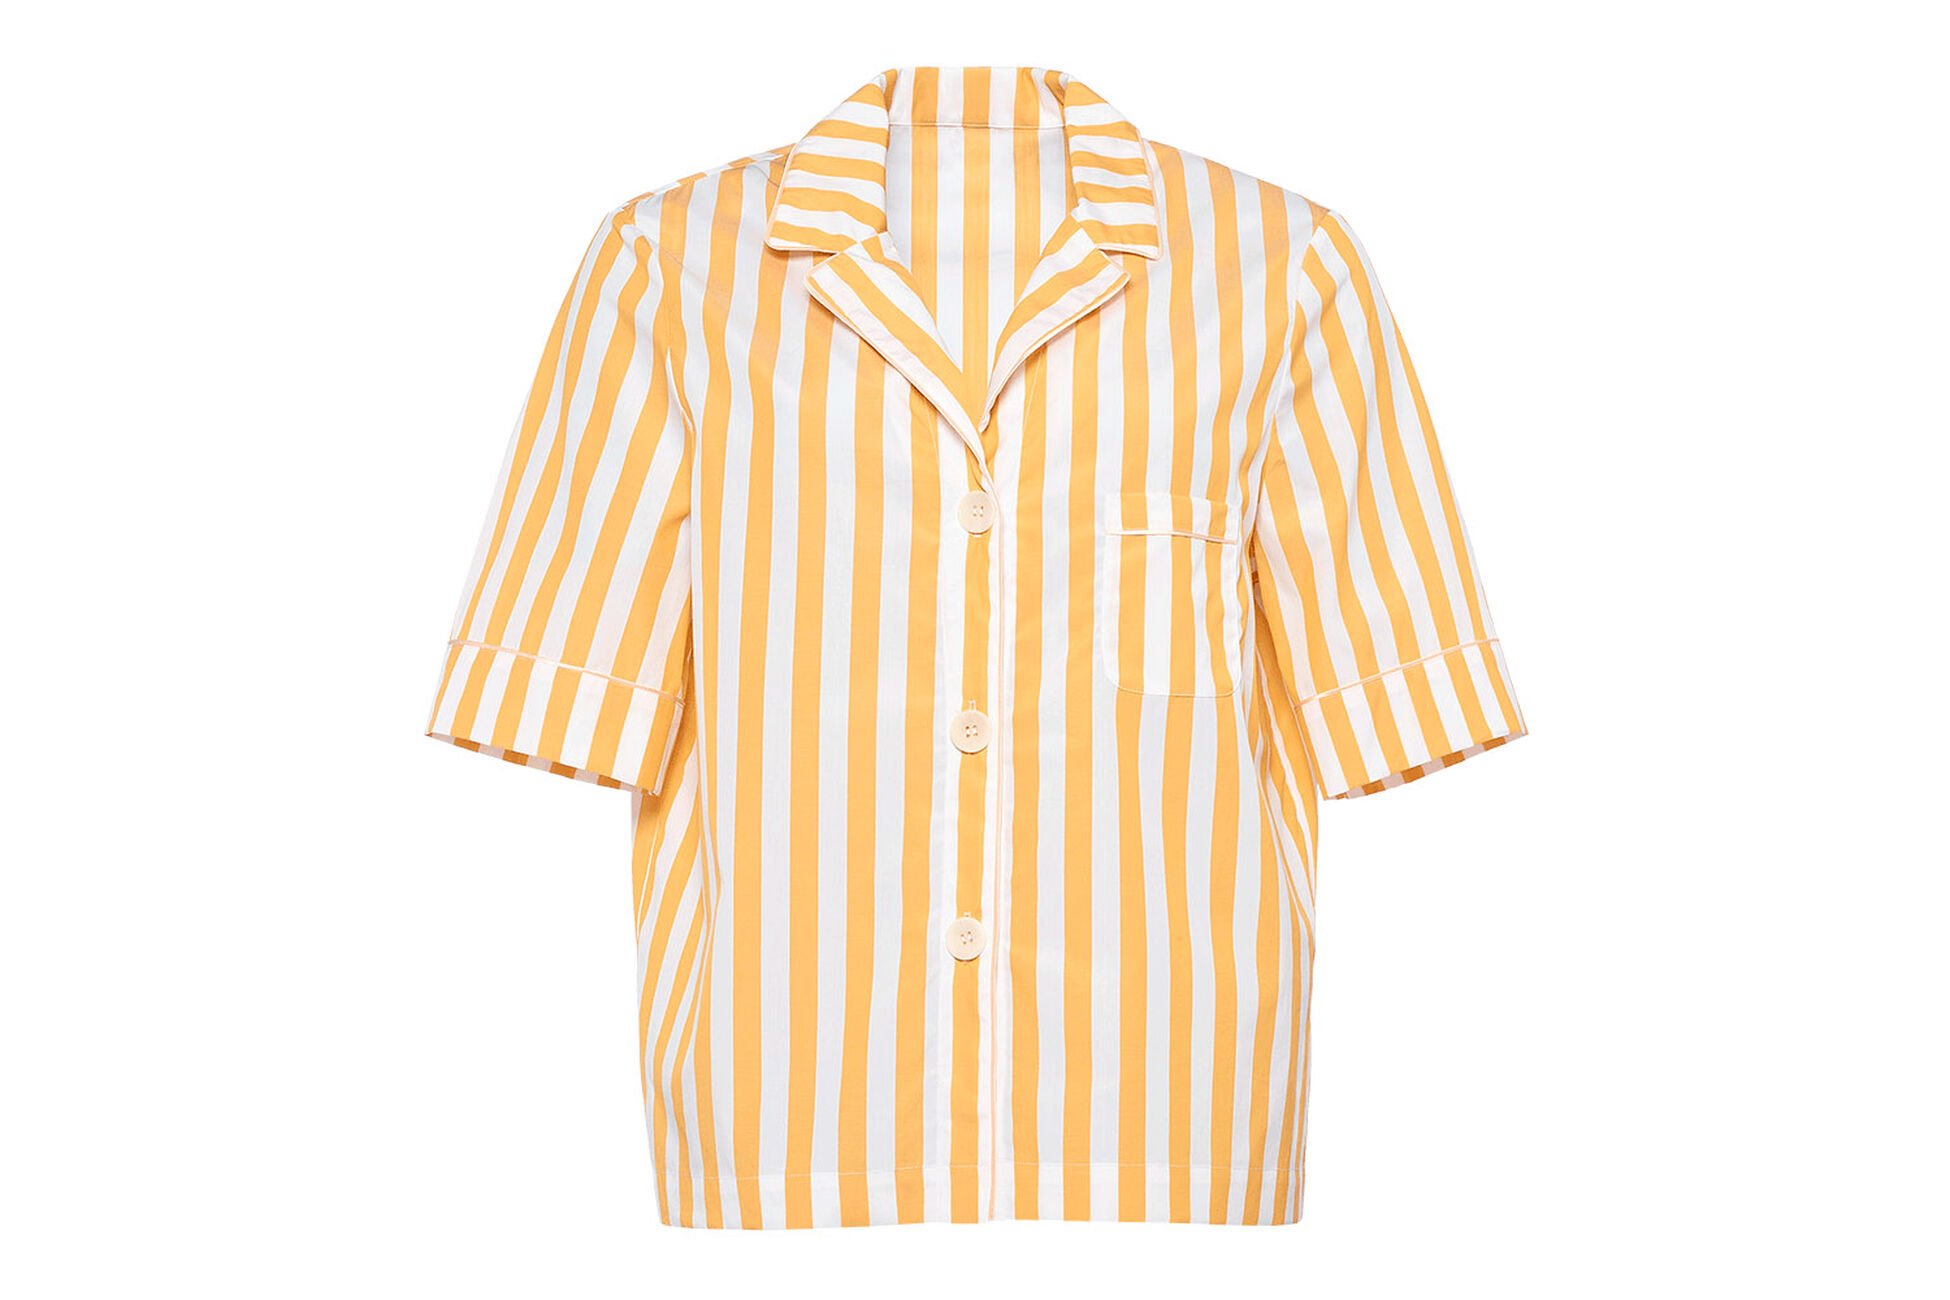 Orangeade Camisa Vista estándar NaN